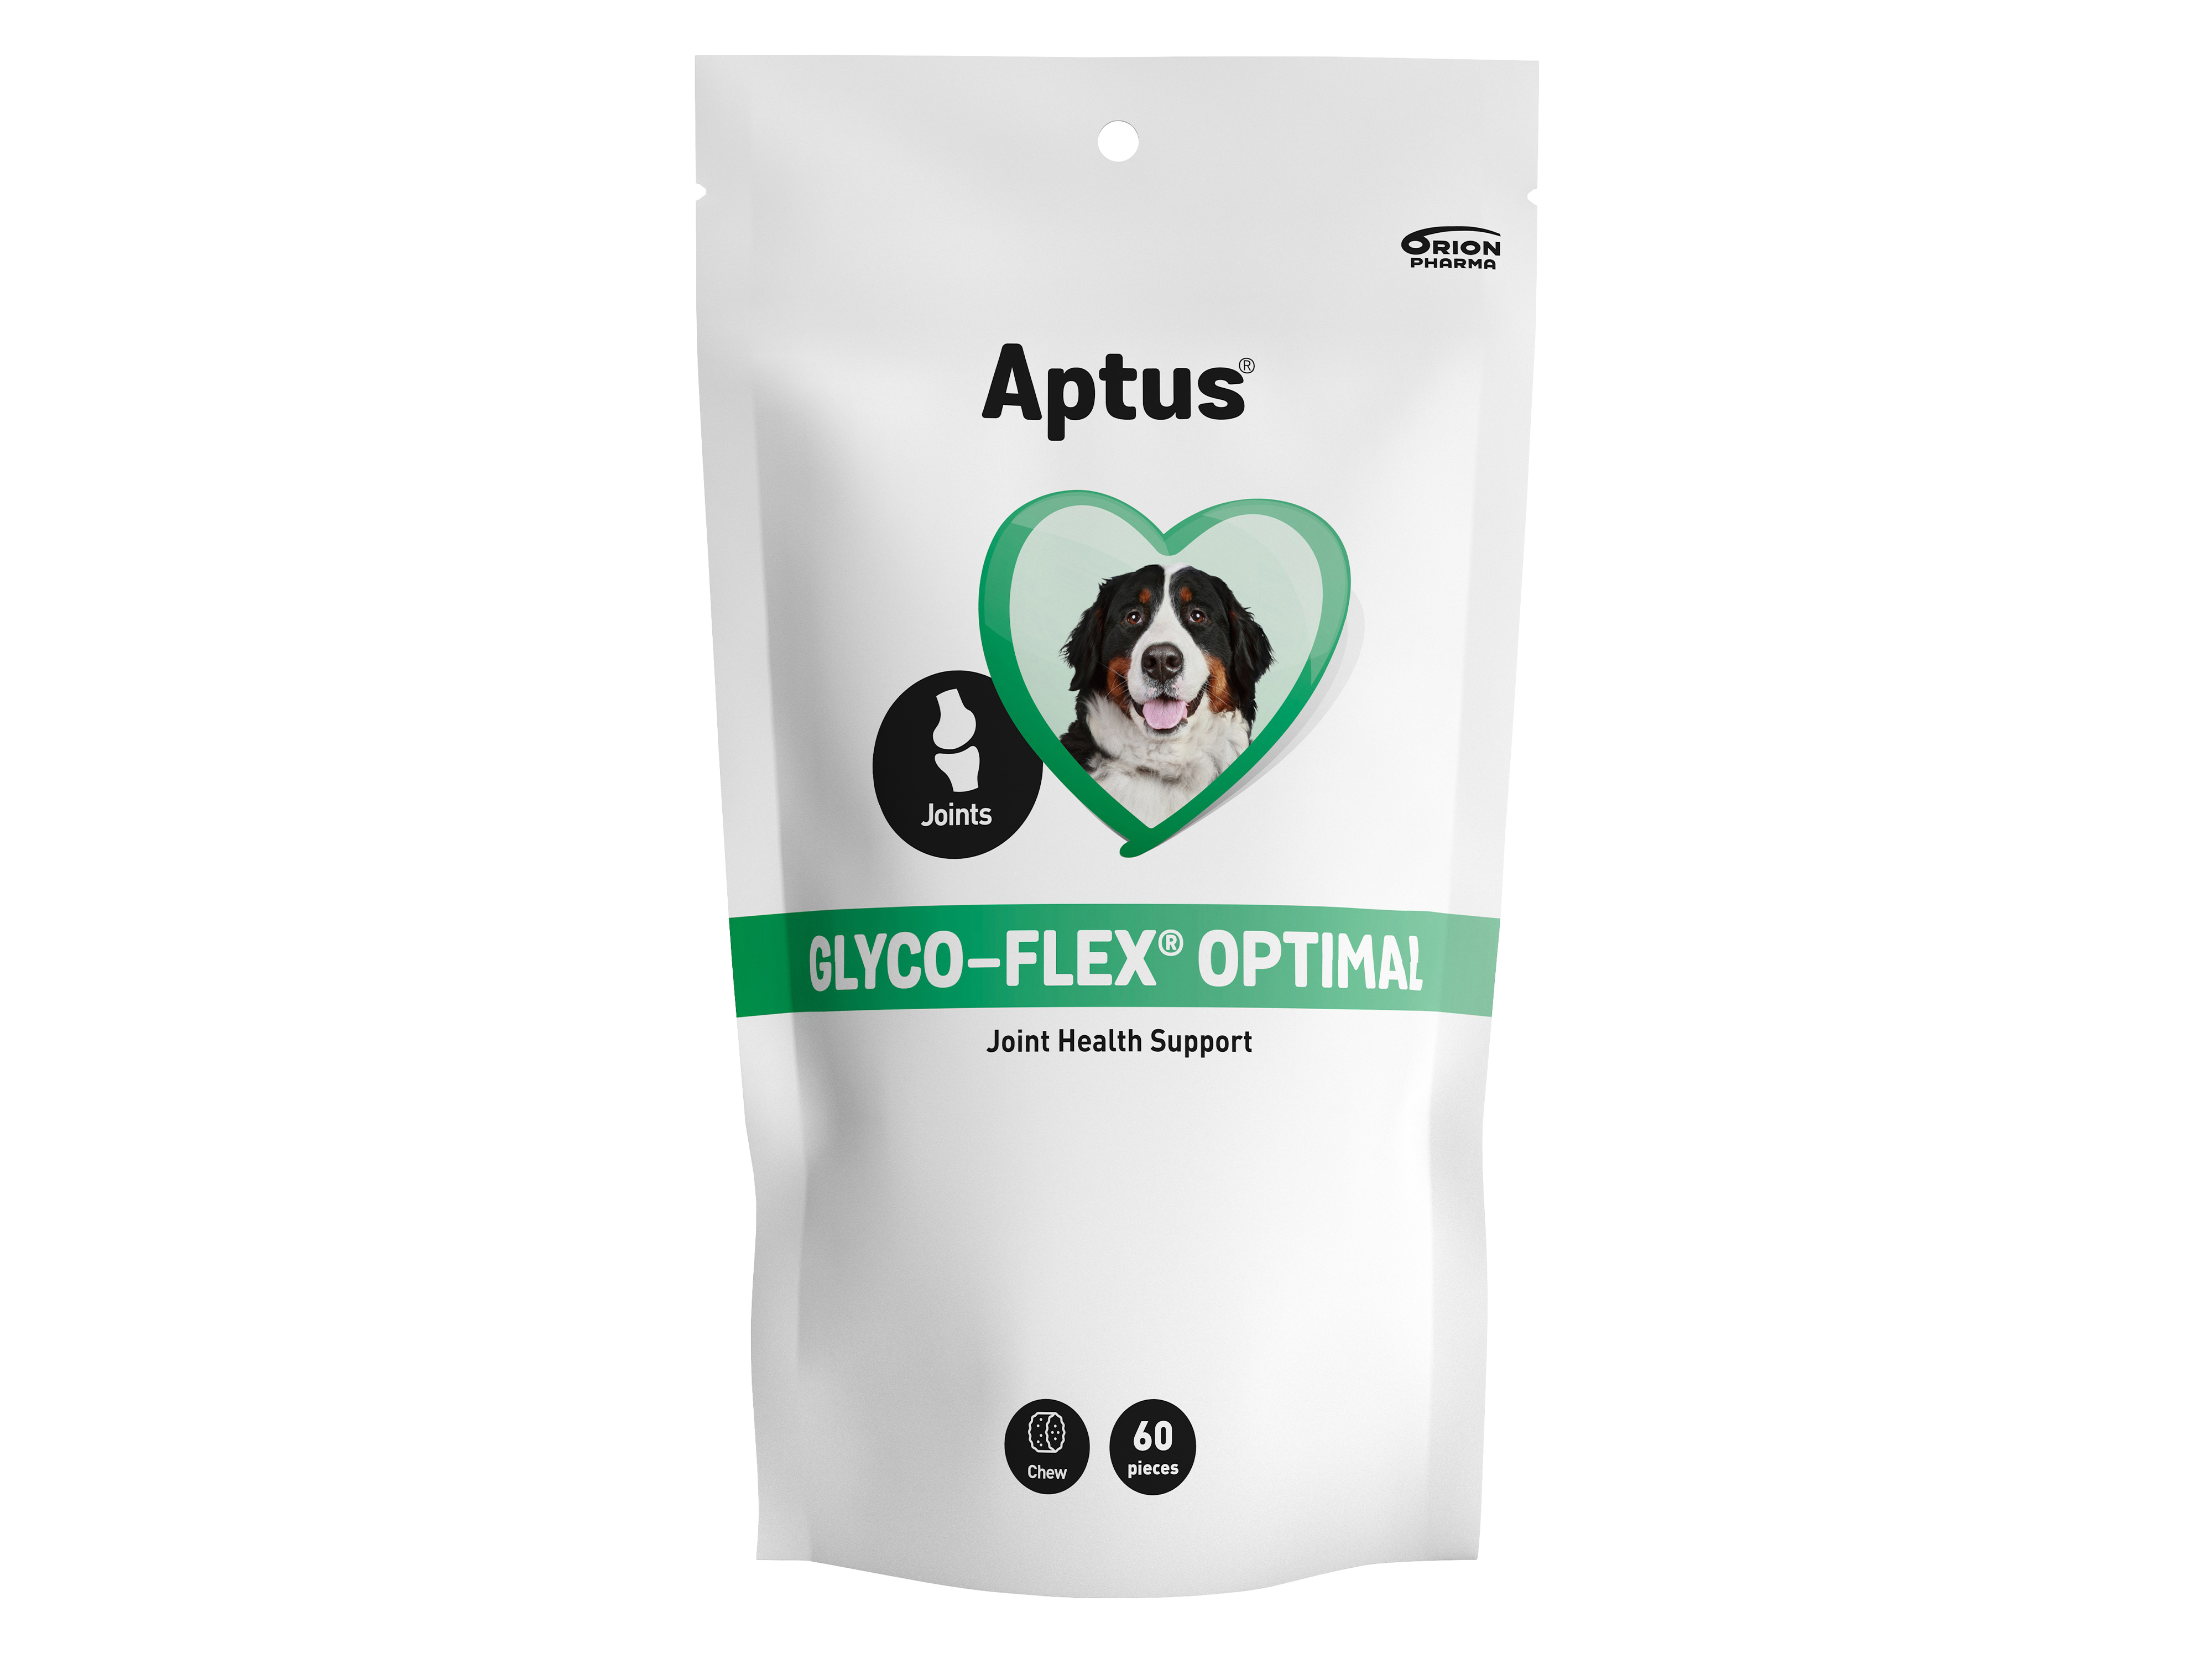 Aptus Glyco-Flex Optimal, 60 tyggebiter